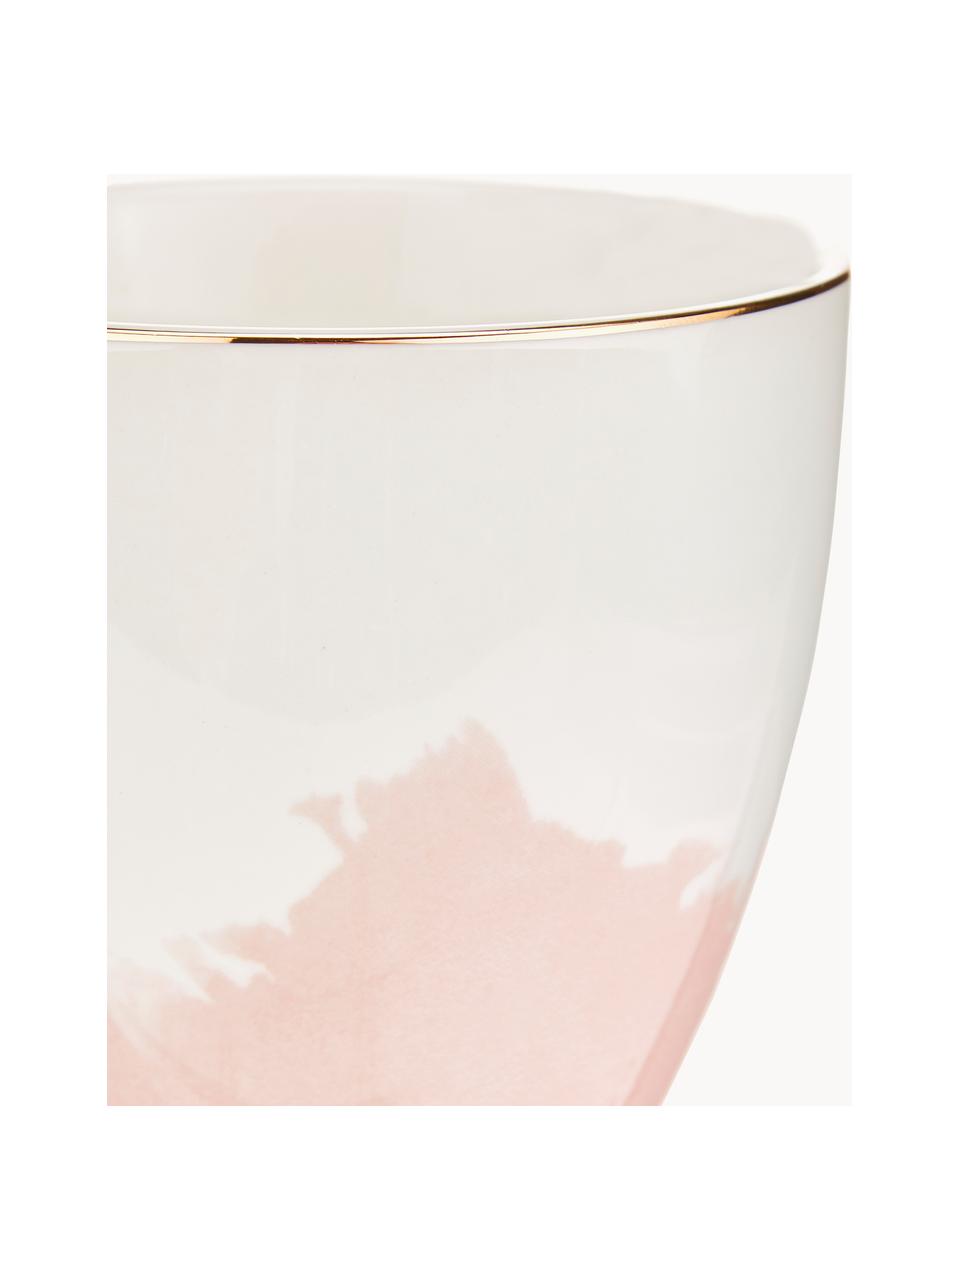 Porcelánový kávový šálek  s abstraktním vzorem a se zlatým okrajem Rosie, 2 ks, Porcelán, Bílá, růžová, Ø 12 cm, V 9 cm